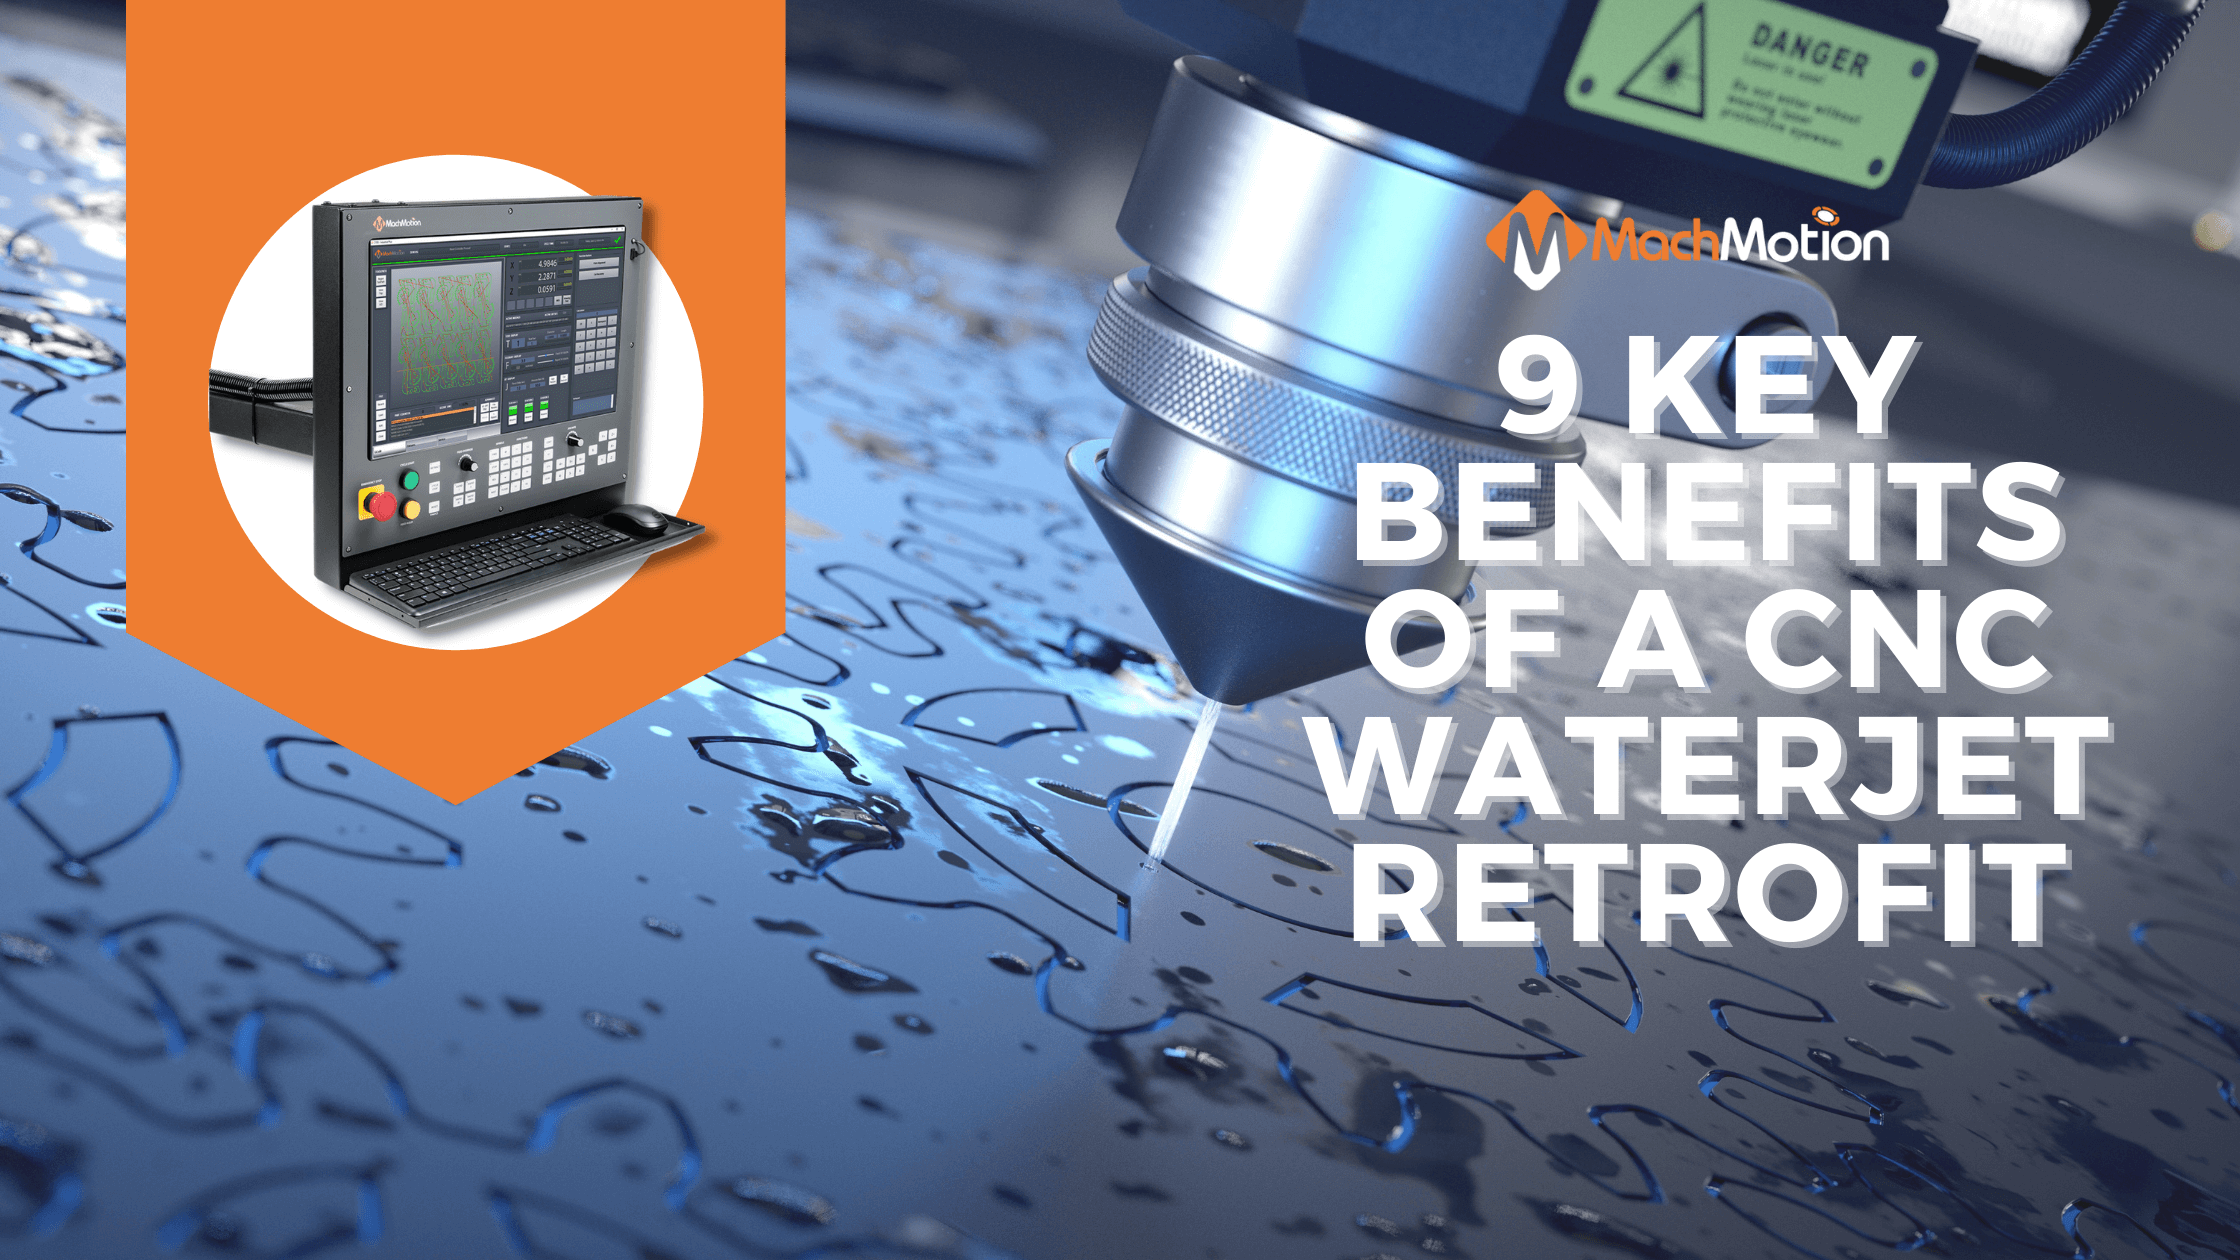 9 key benefits of a cnc waterjet retrofit